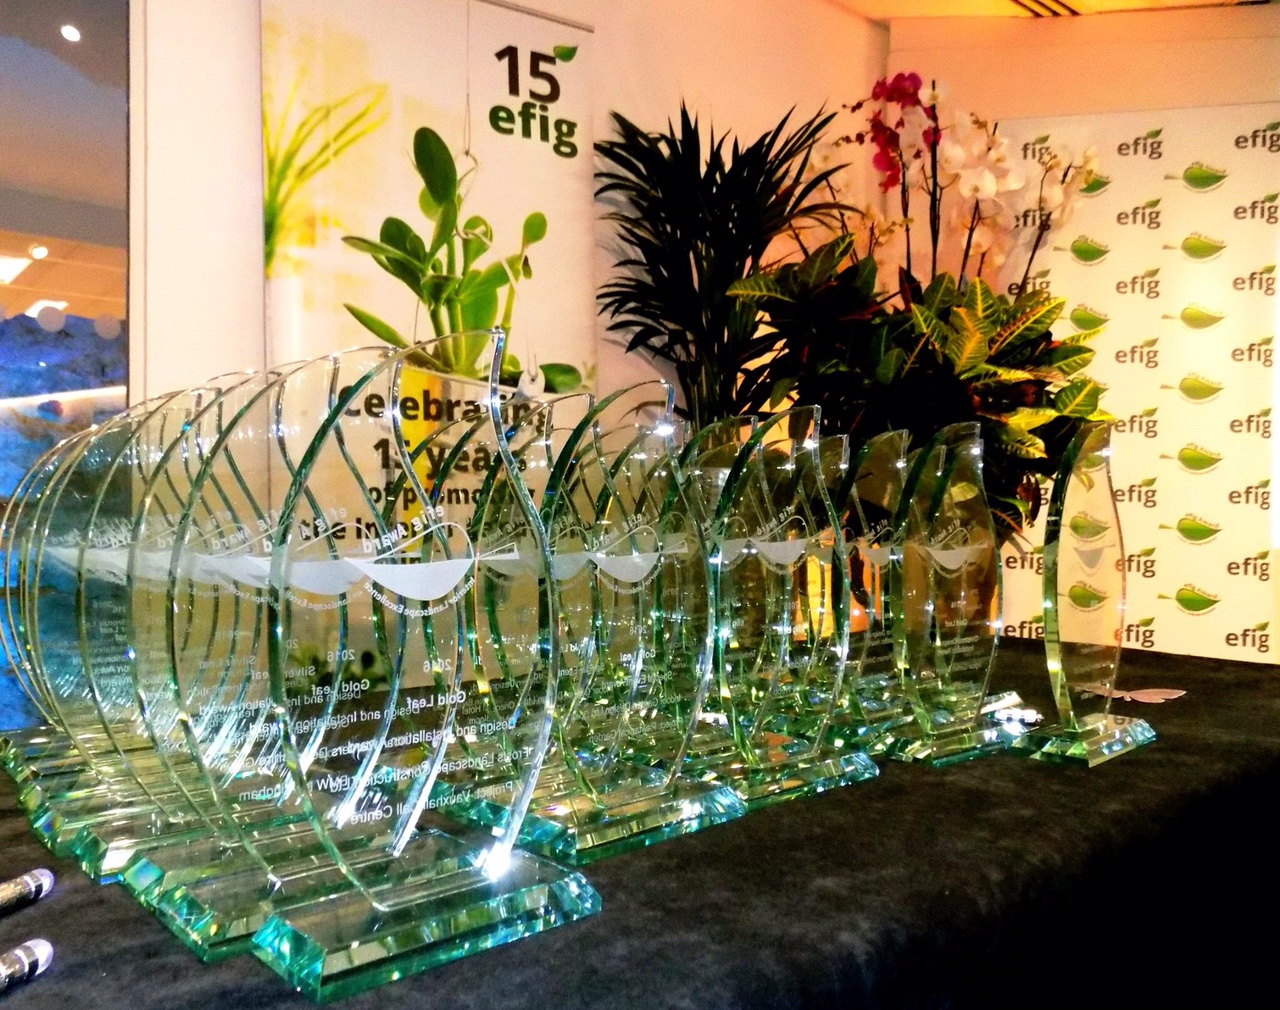 Green Team Interiors Proud Winners at Efig Awards 2017